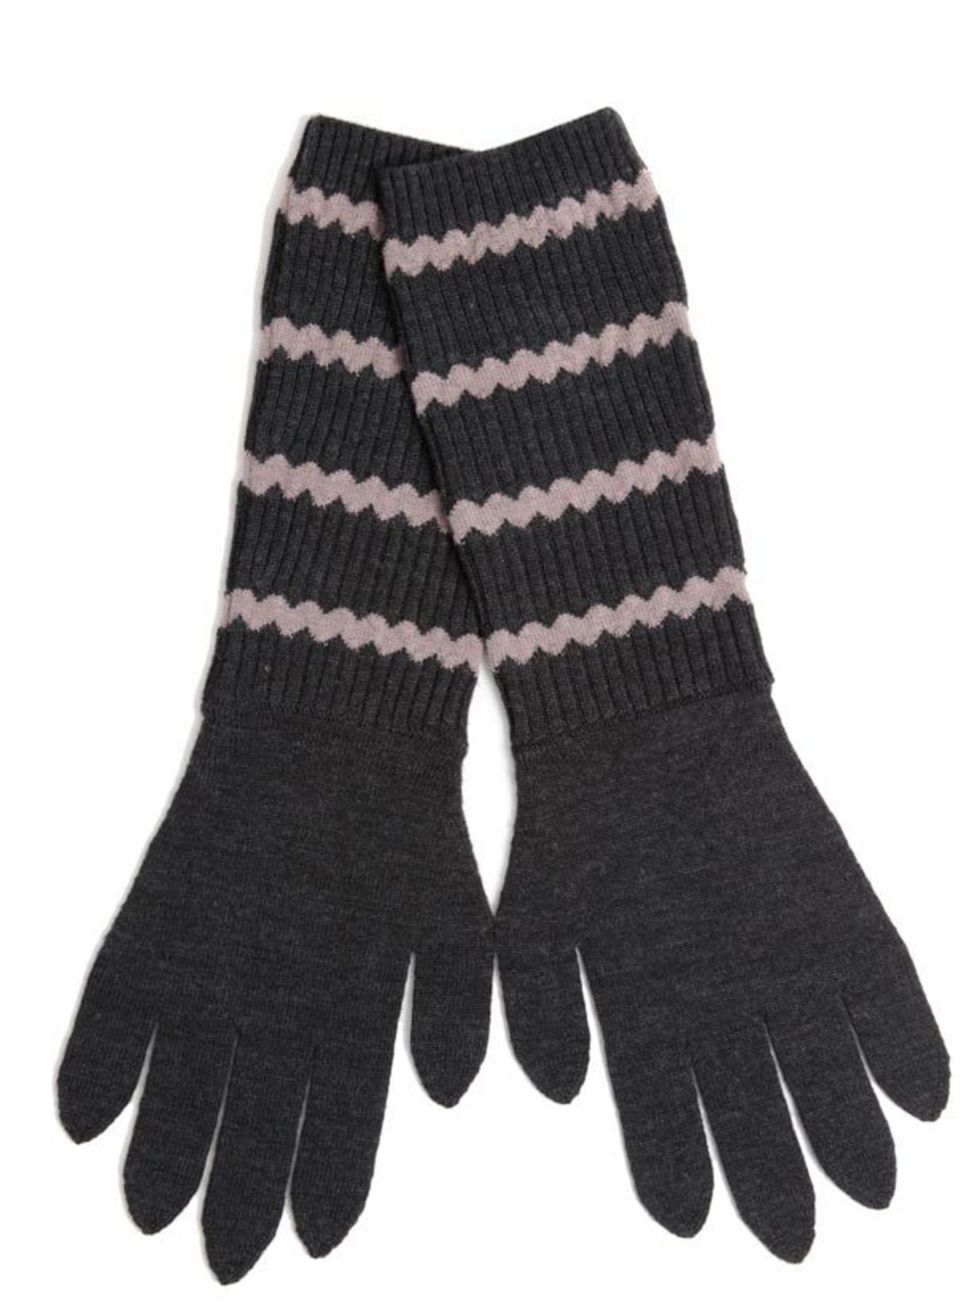 <p><a href="http://www.nicolefarhi.com/shop/product/Womens/RIK-RAK-GLOVES/1944?size=O/S">Nicole Farhi</a> knitted gloves, £80</p>